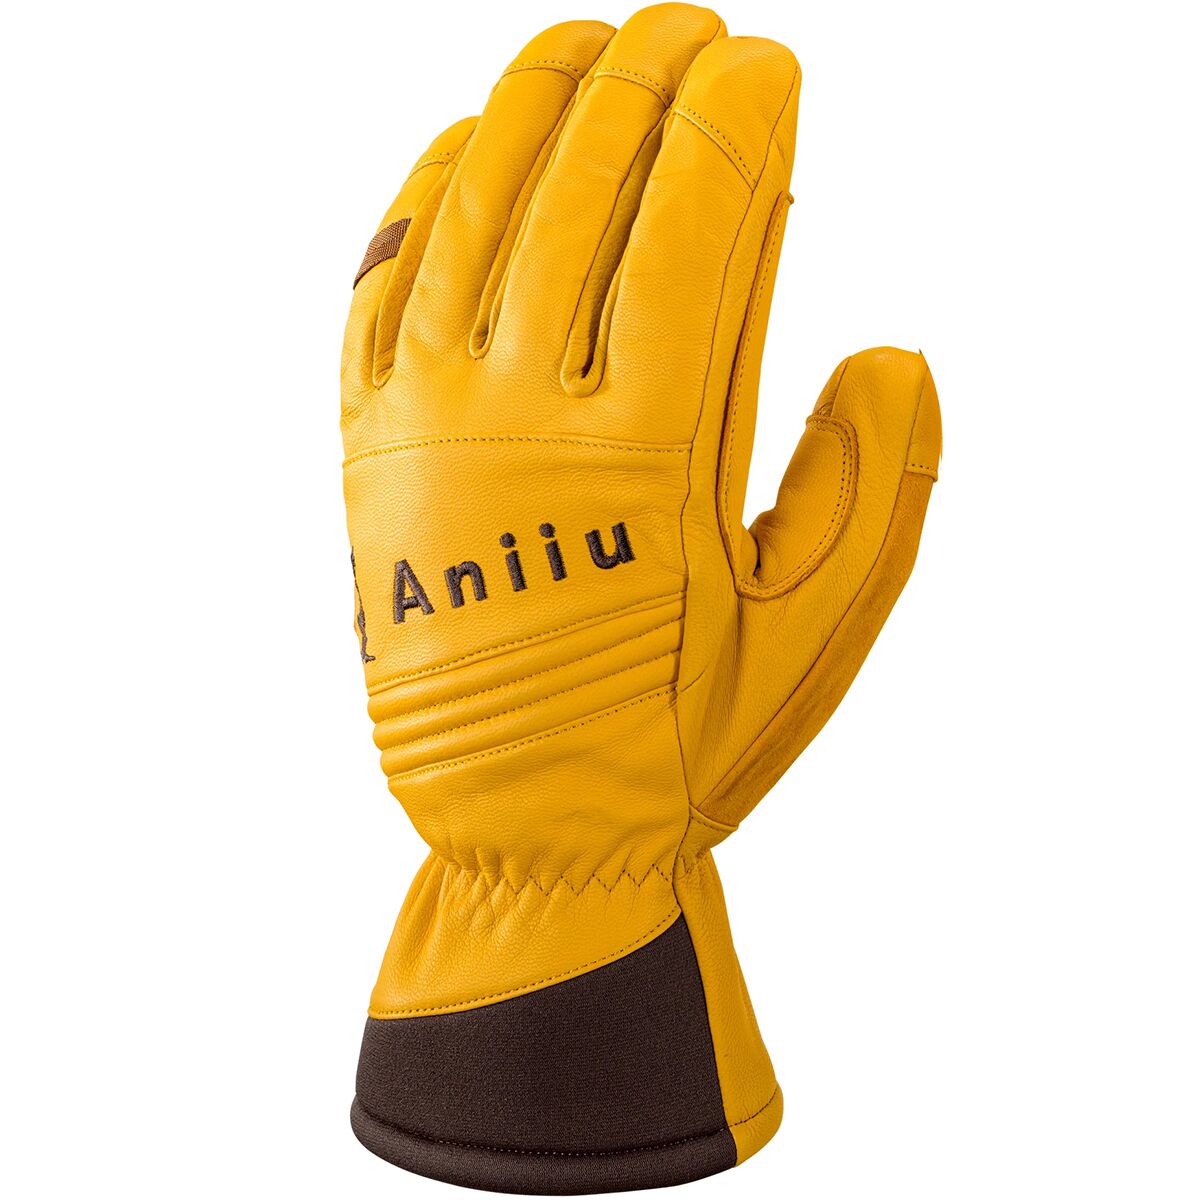 Aniiu Tyree Short Pro Glove - Men's Natural